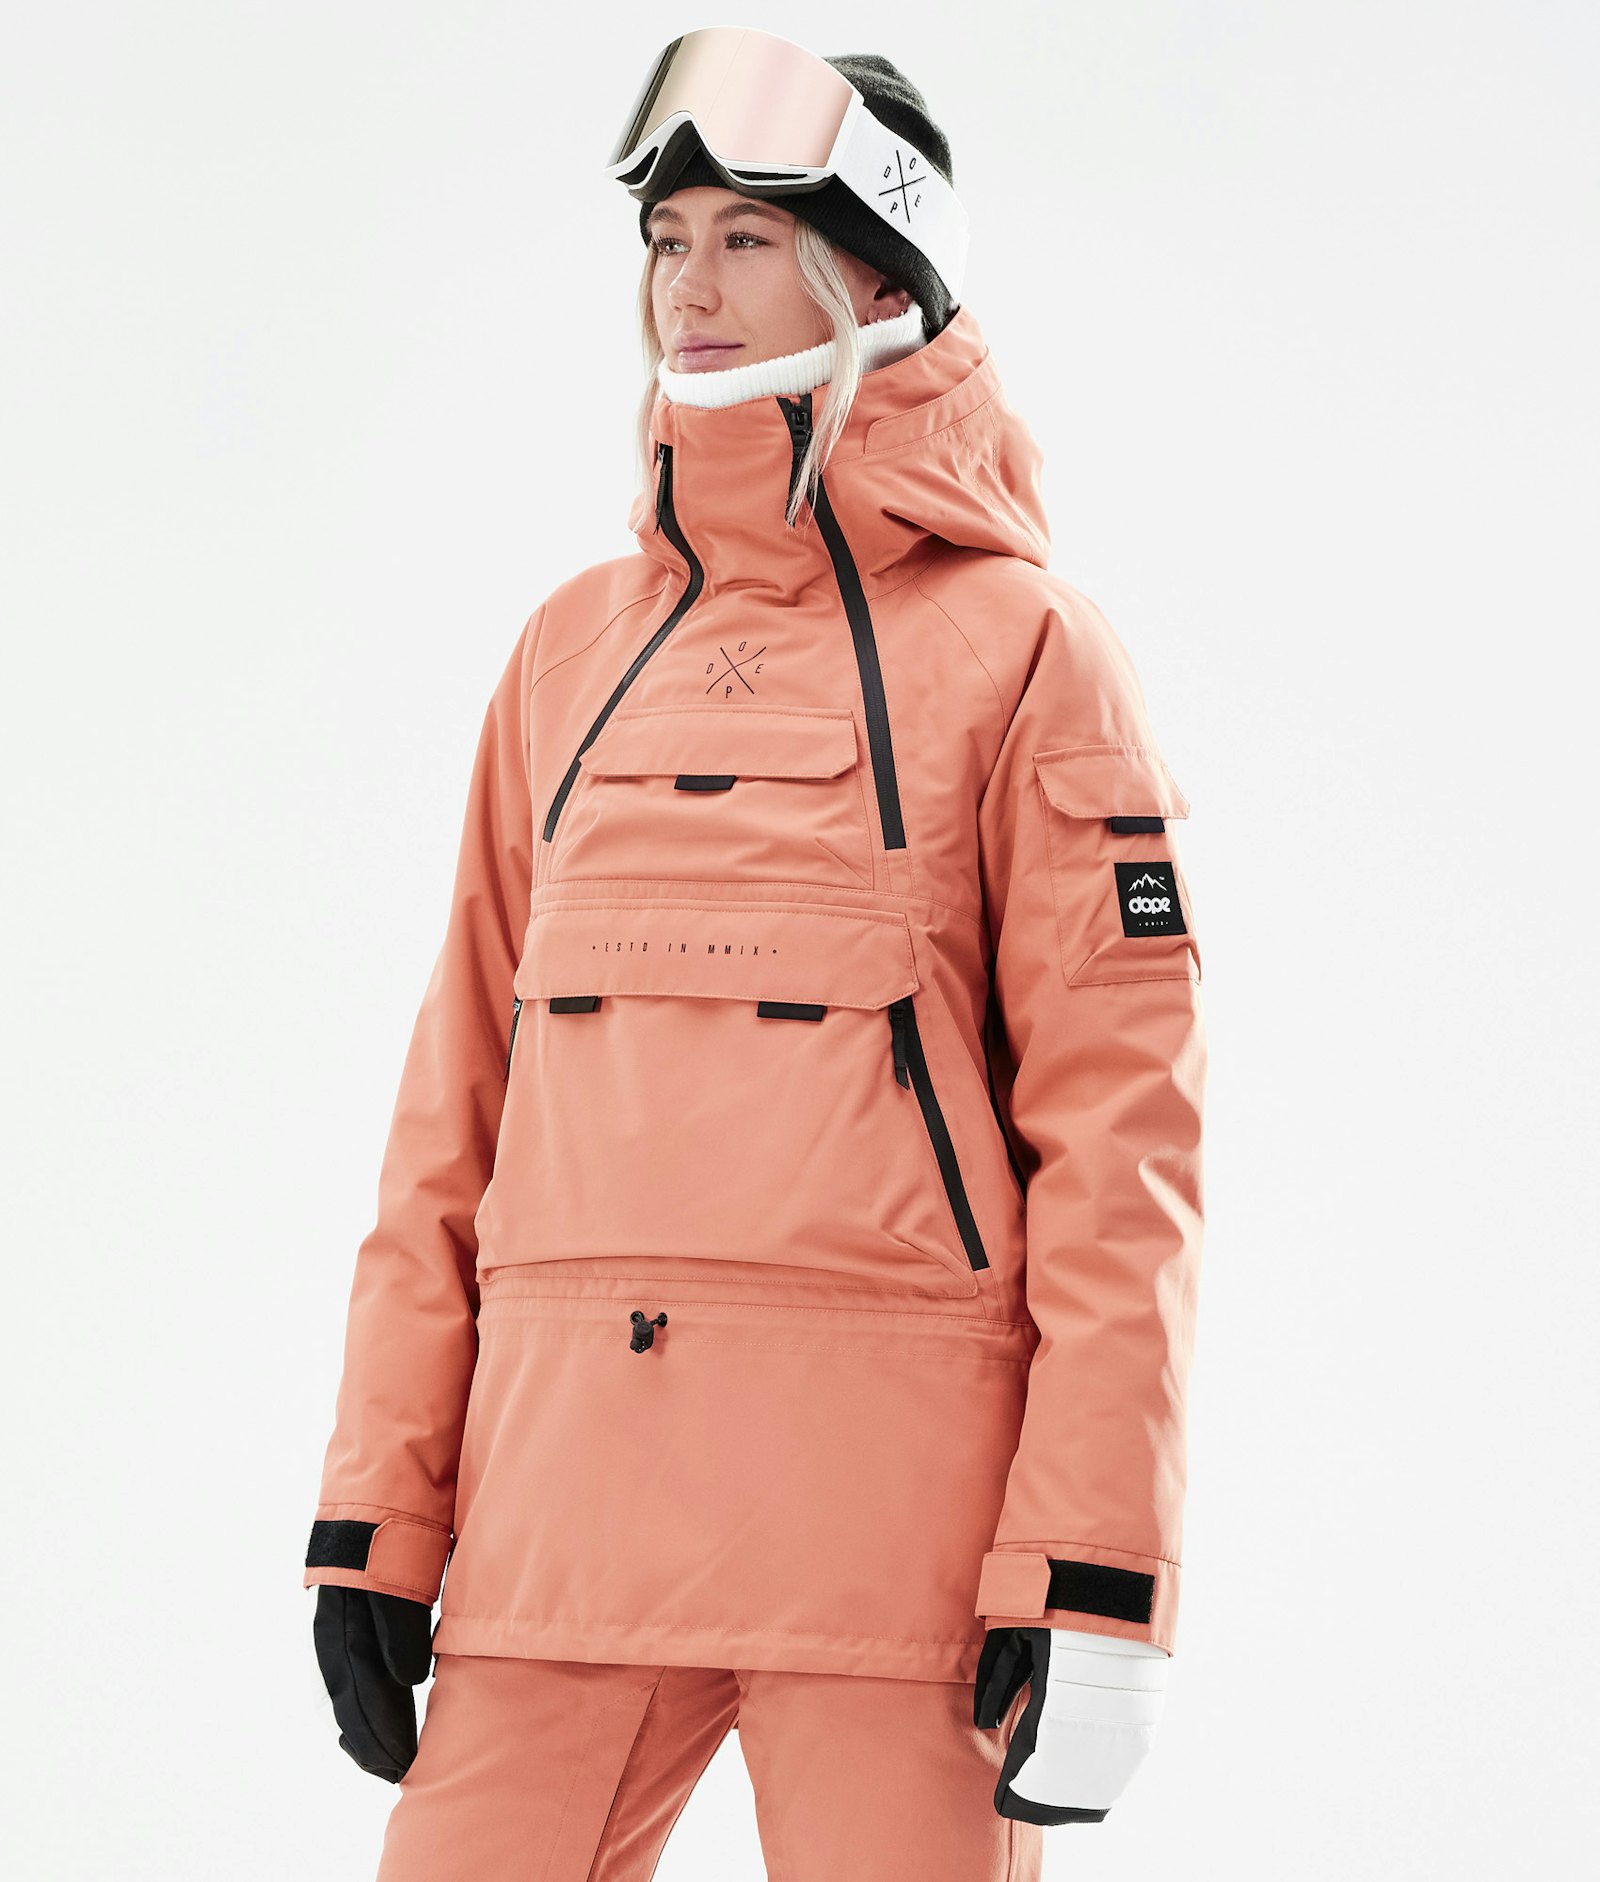 Akin W 2021 Veste Snowboard Femme Peach Renewed, Image 1 sur 11